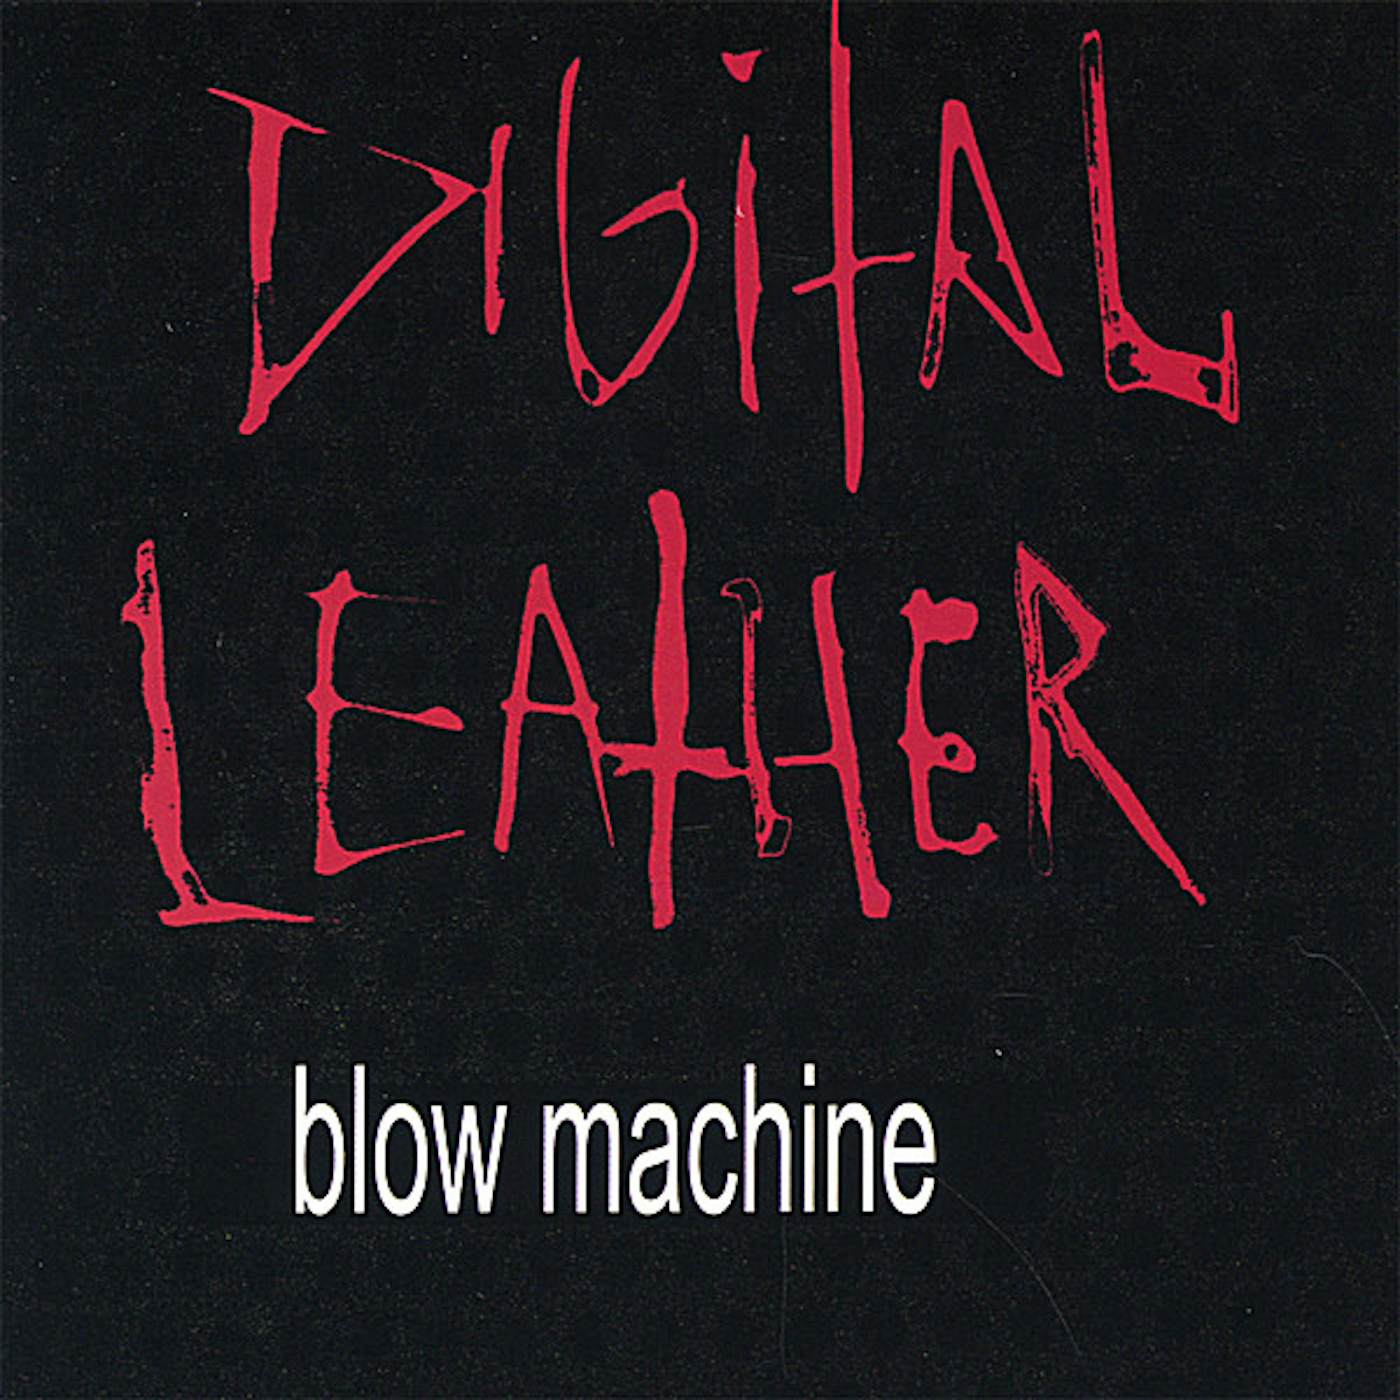 Digital Leather BLOW MACHINE CD